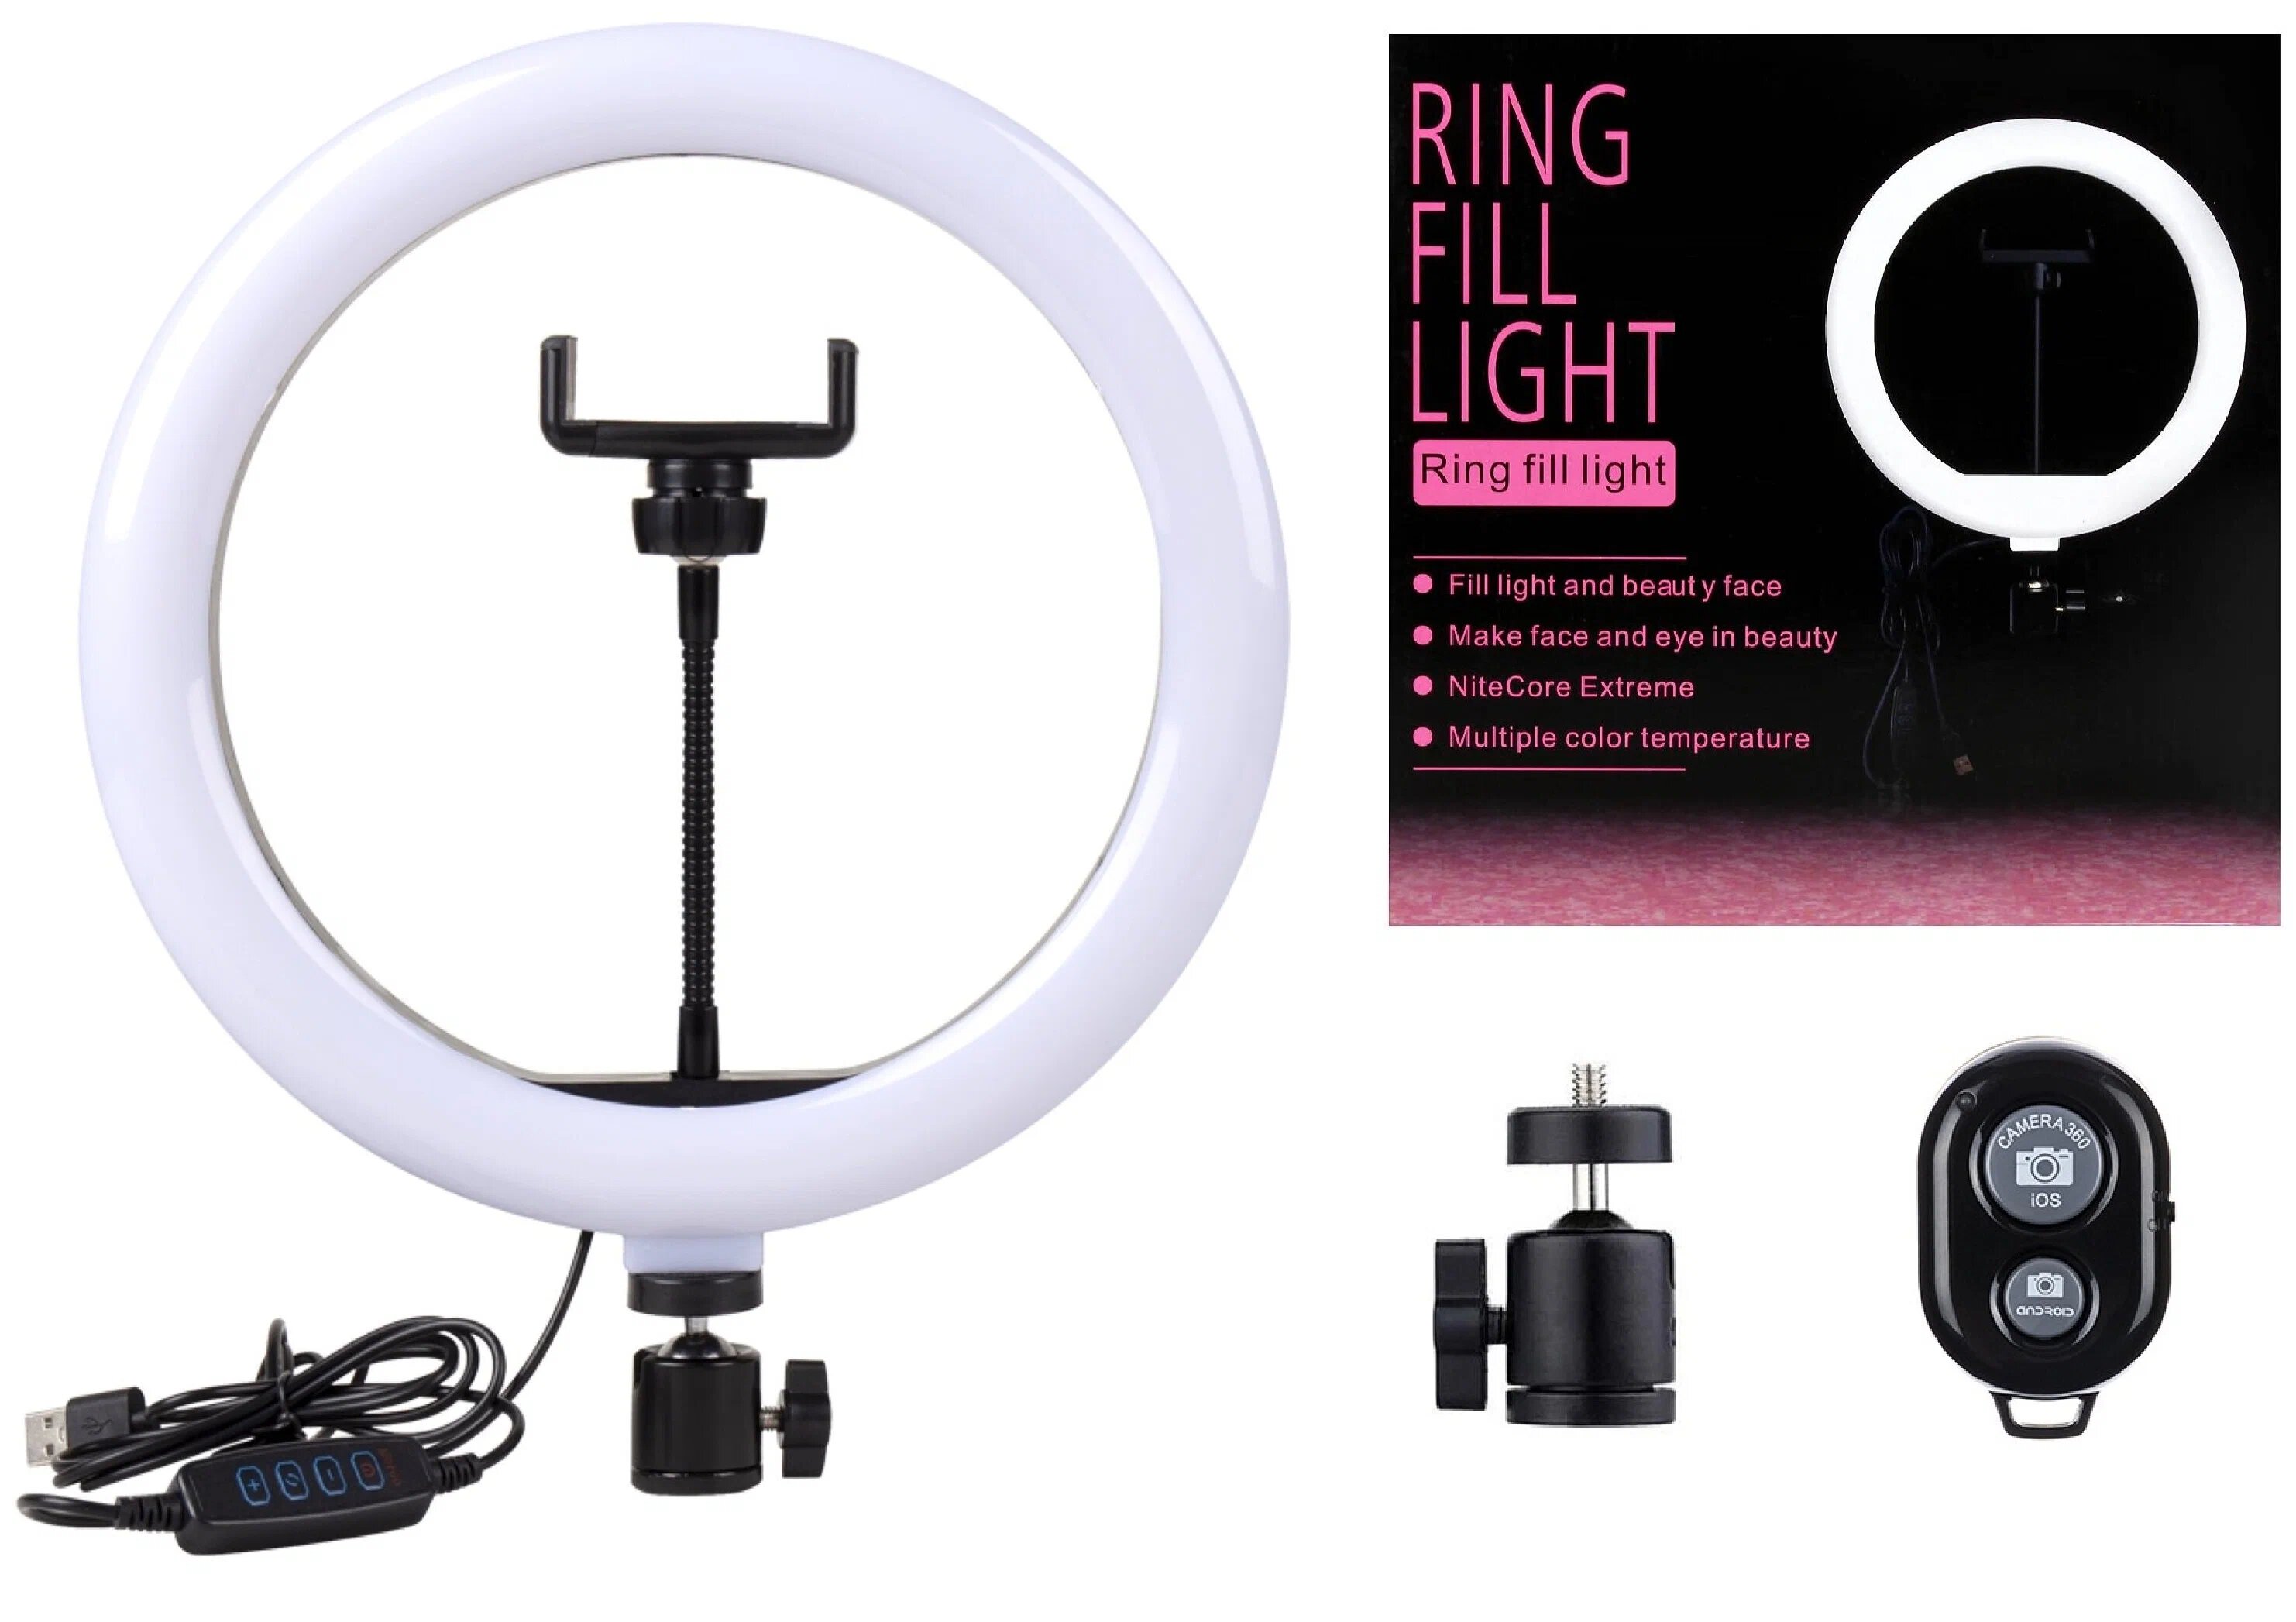 Кольцевая лампа 26 см (без штатива) + Bluetooth пульт + держатель для телефона "Селфи кольцо RING FILL LIGHT CXB-260"